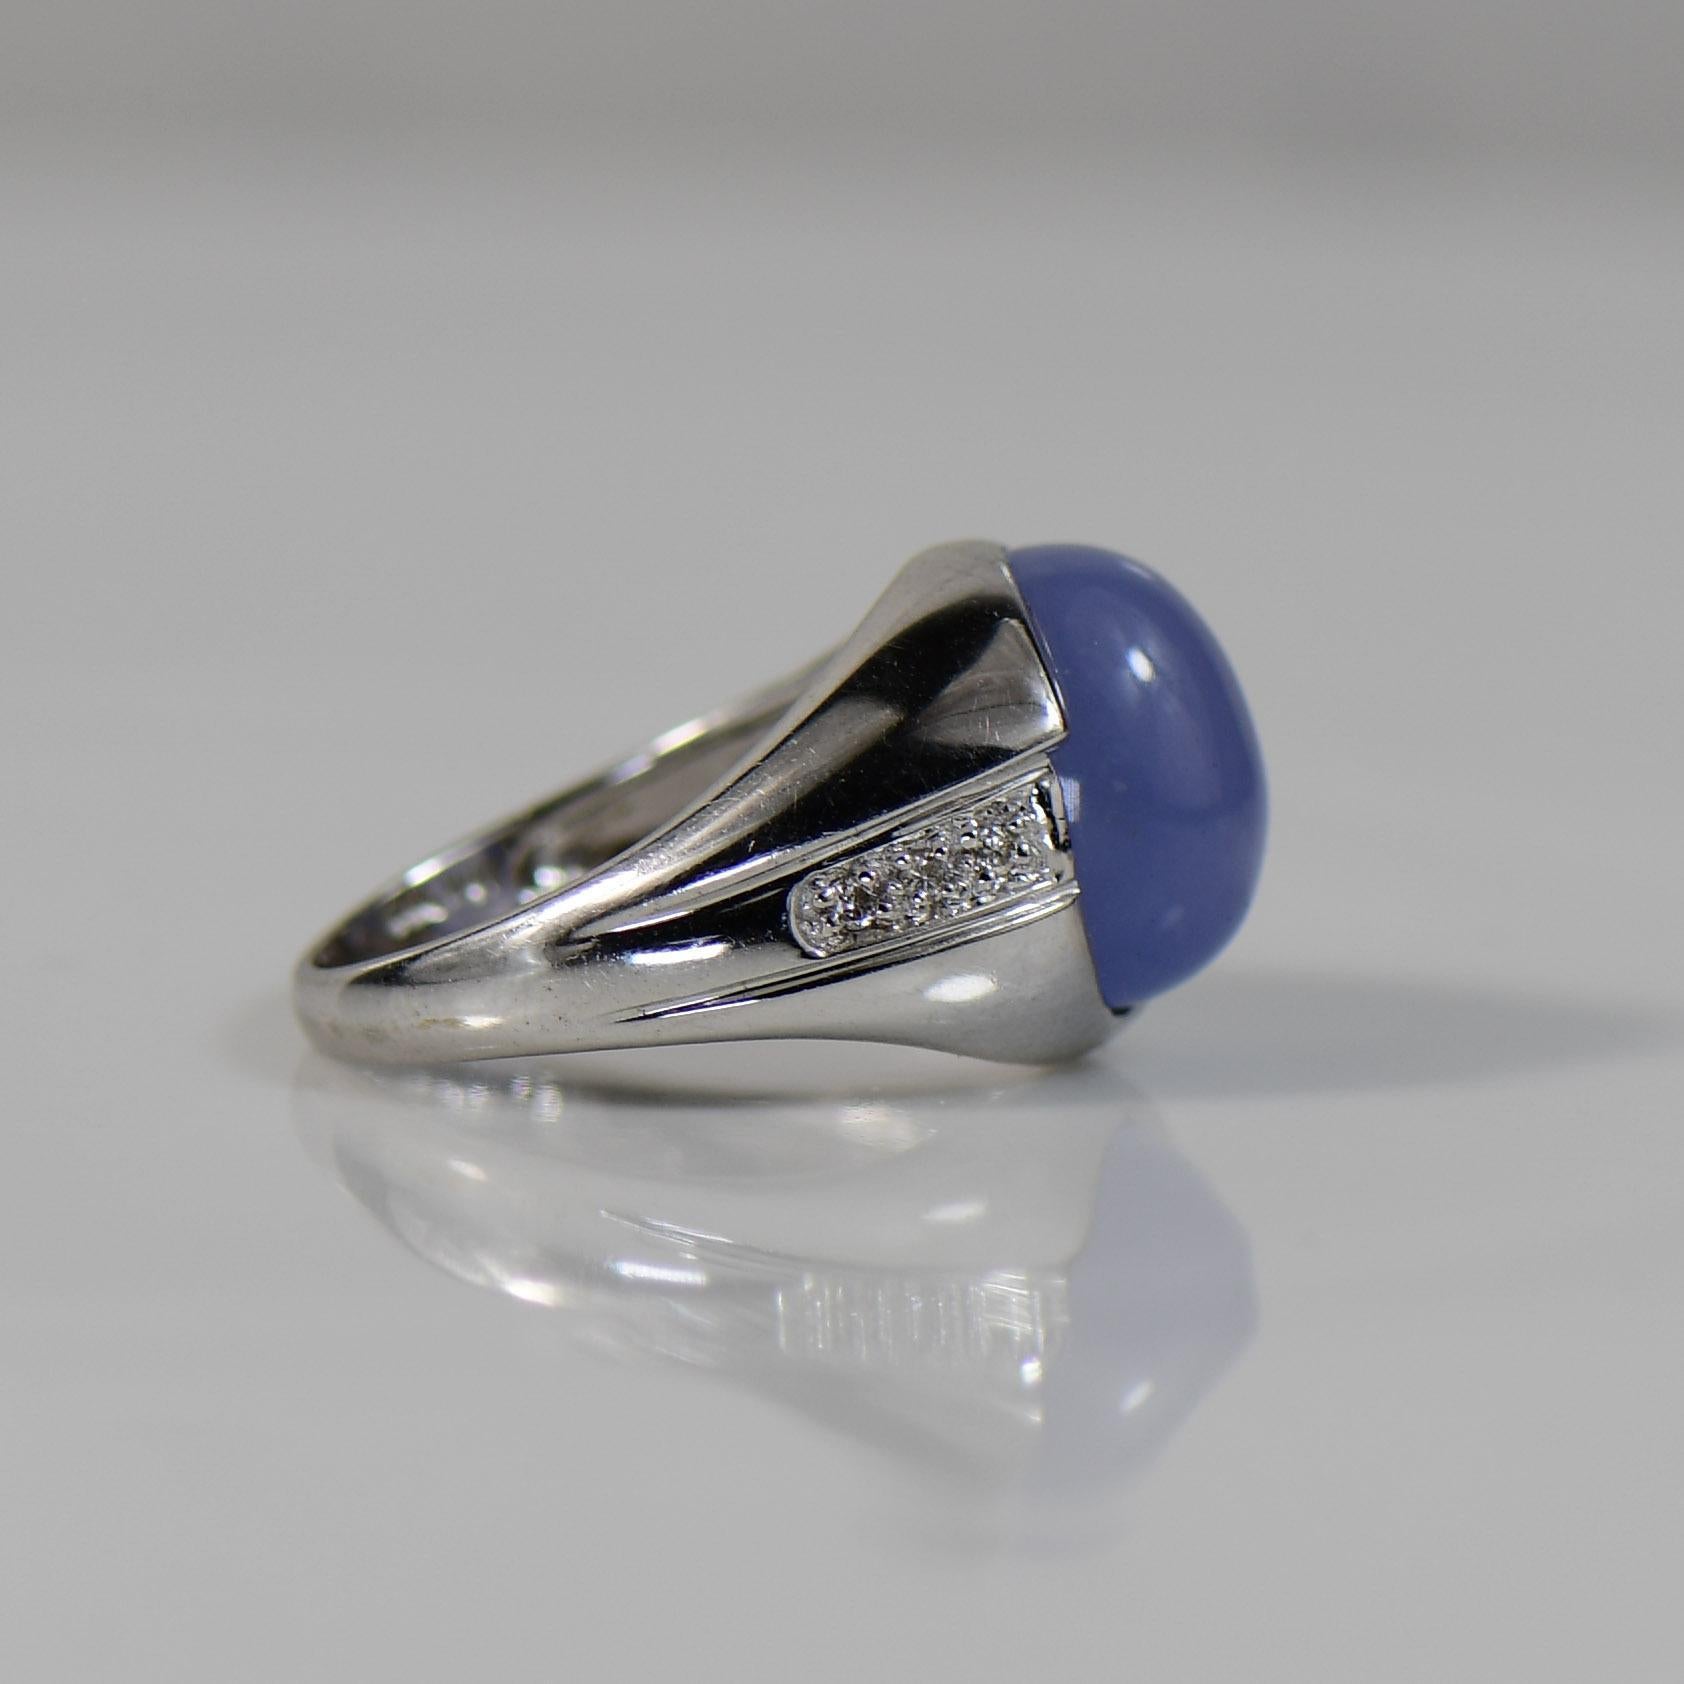 8.25 Carat Blue Sapphire Cabochon w Diamonds 18K White Gold Ring 1